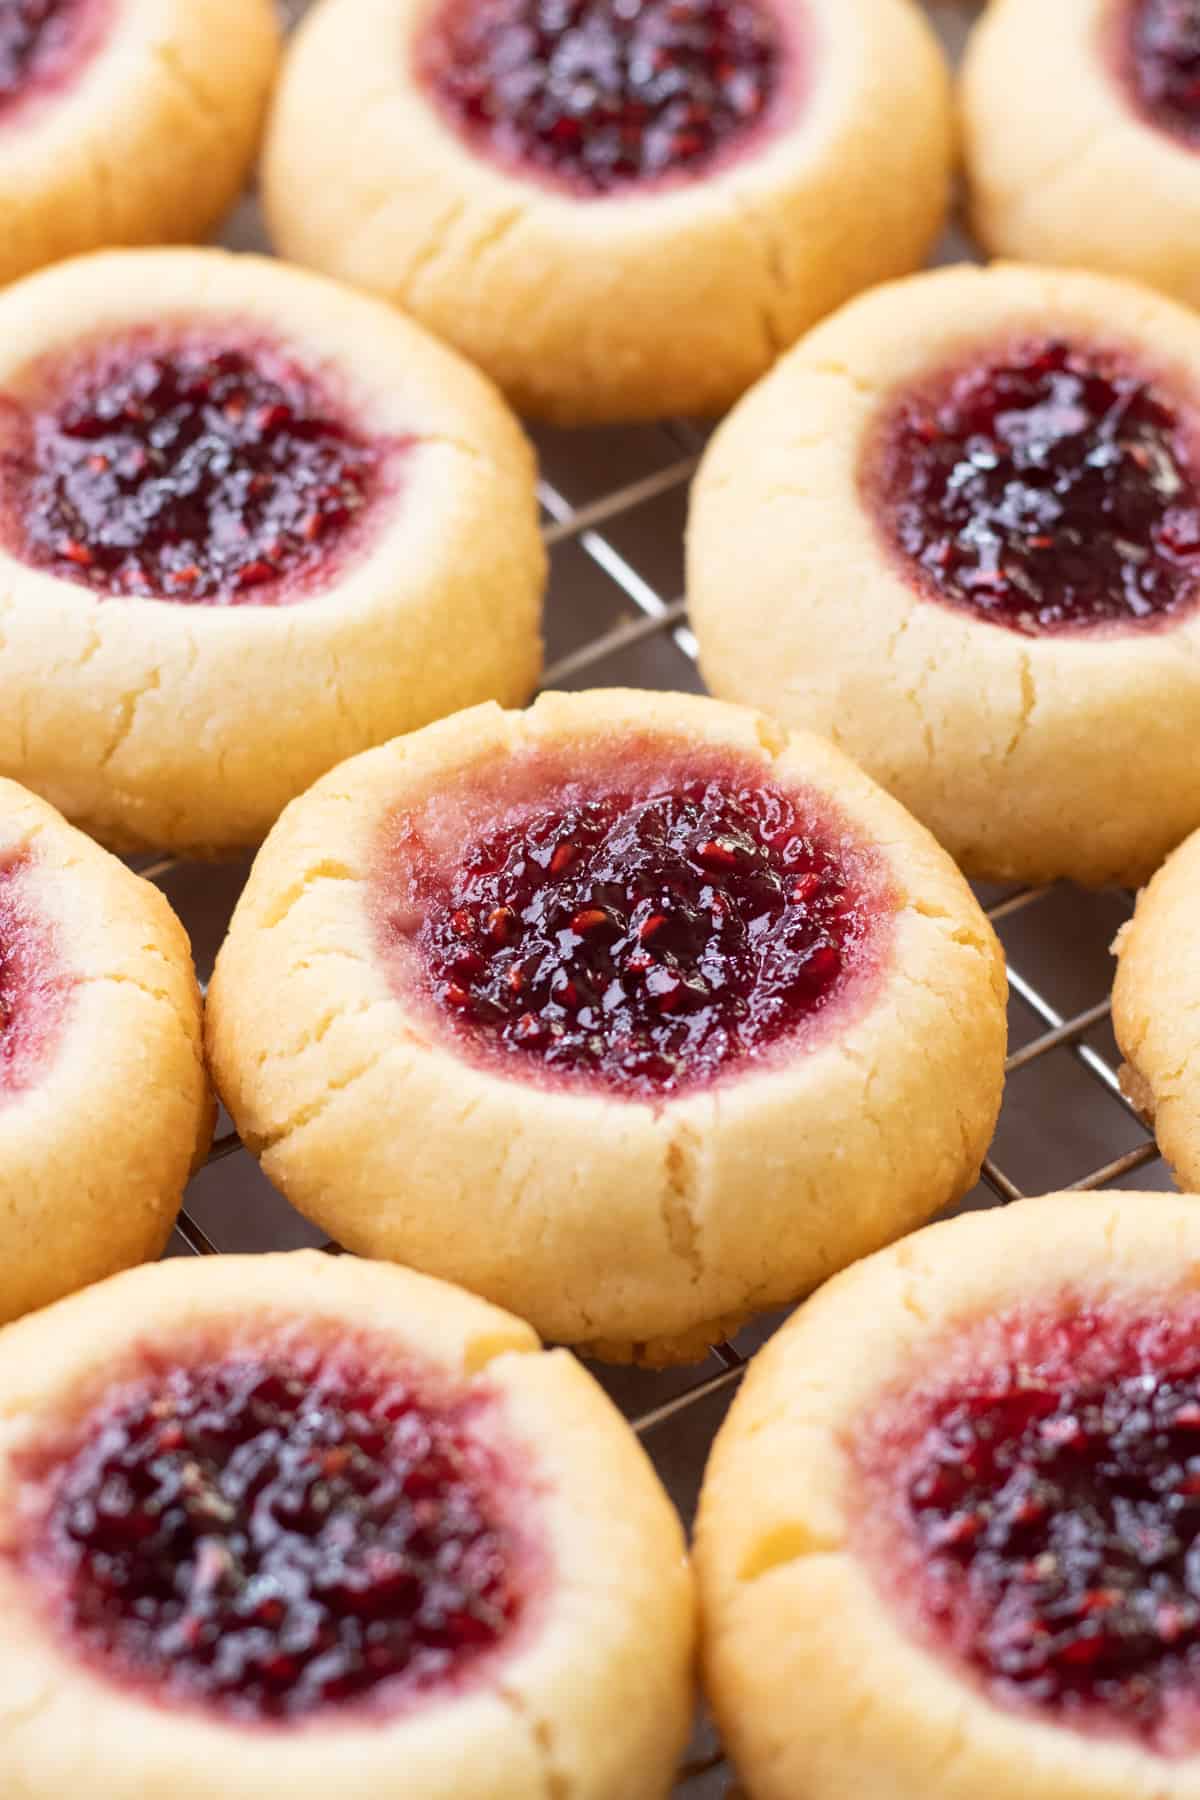 Close up photo of Raspberry Almond Thumbprint Cookies.